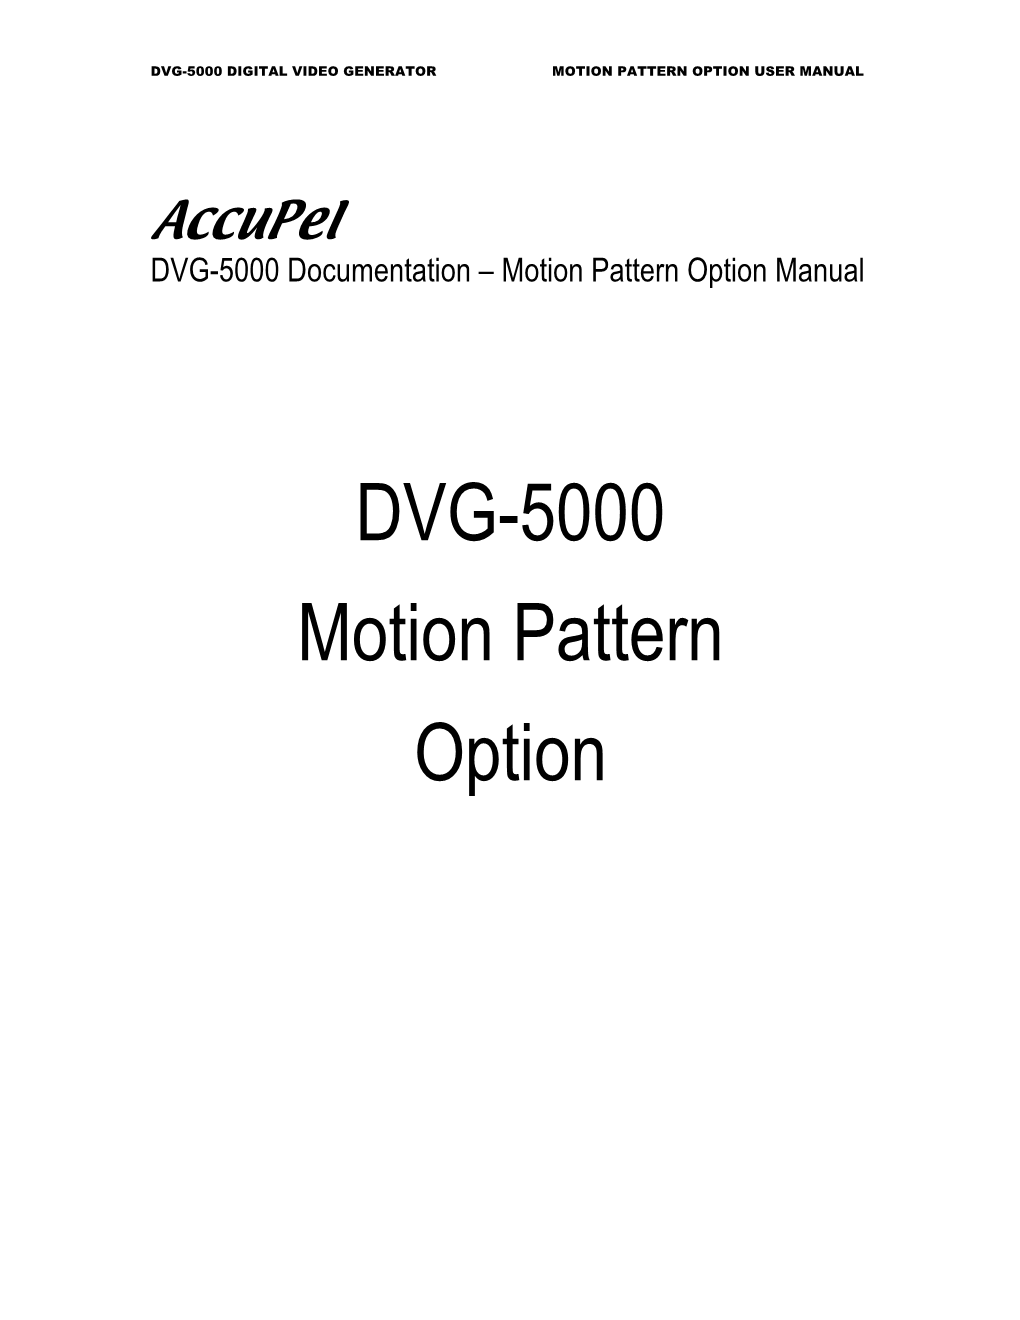 Motion Manual